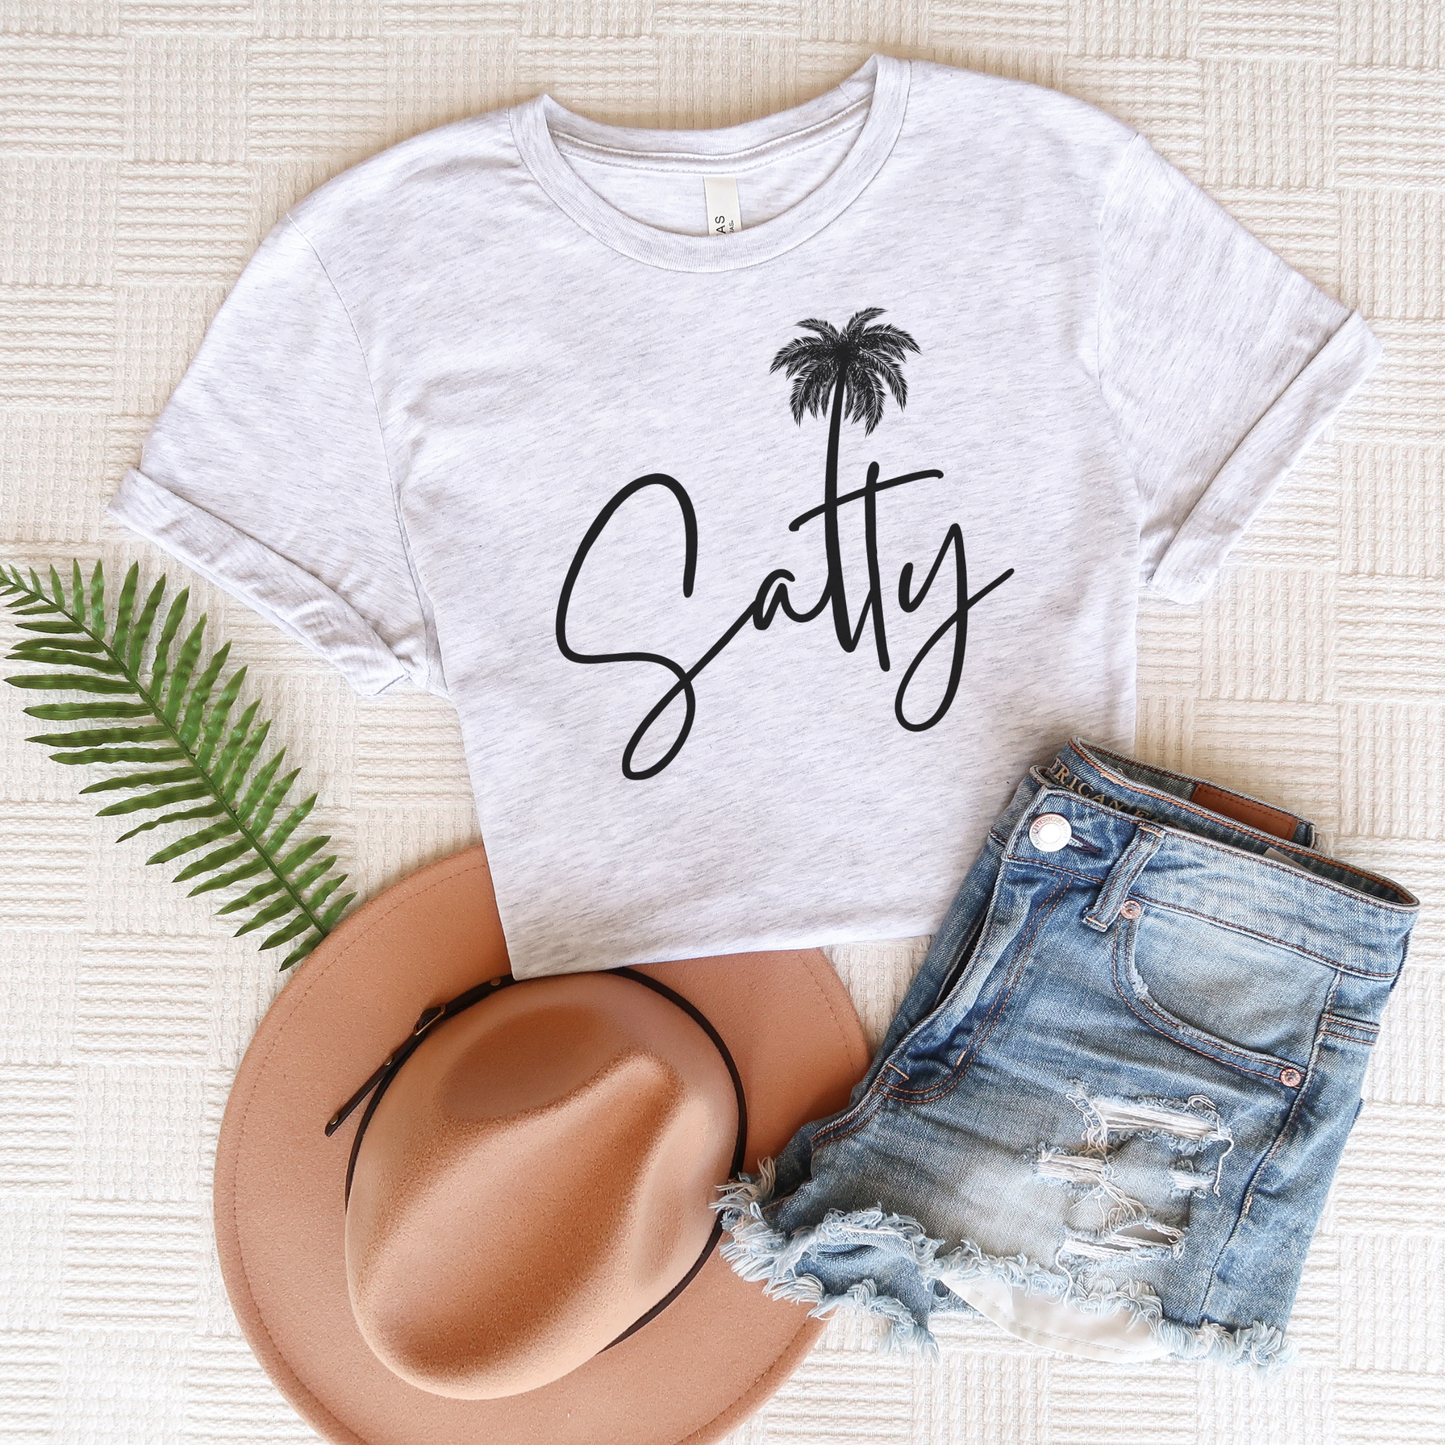 Trendznmore - Salty Beach Graphic T-Shirt: XLarge / Stonewash Blue $38